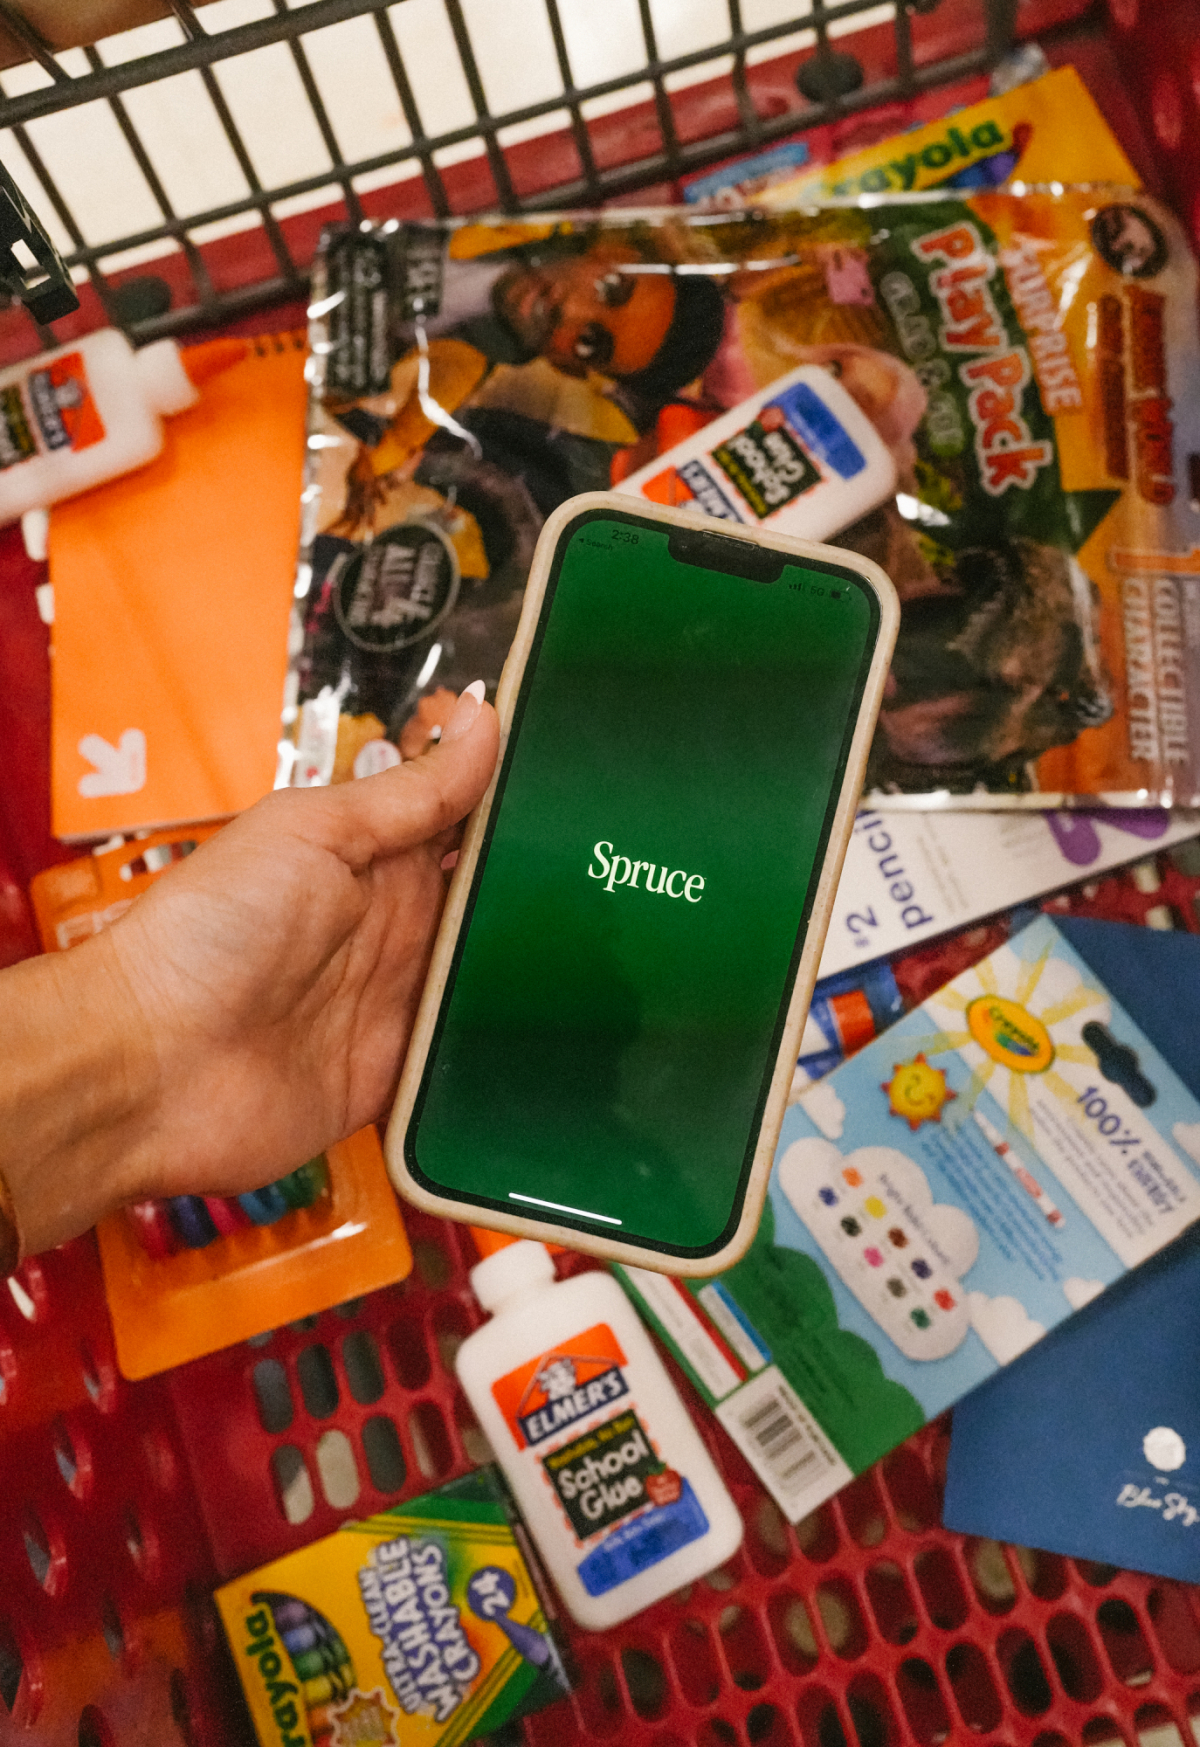 Spruce app for saving money